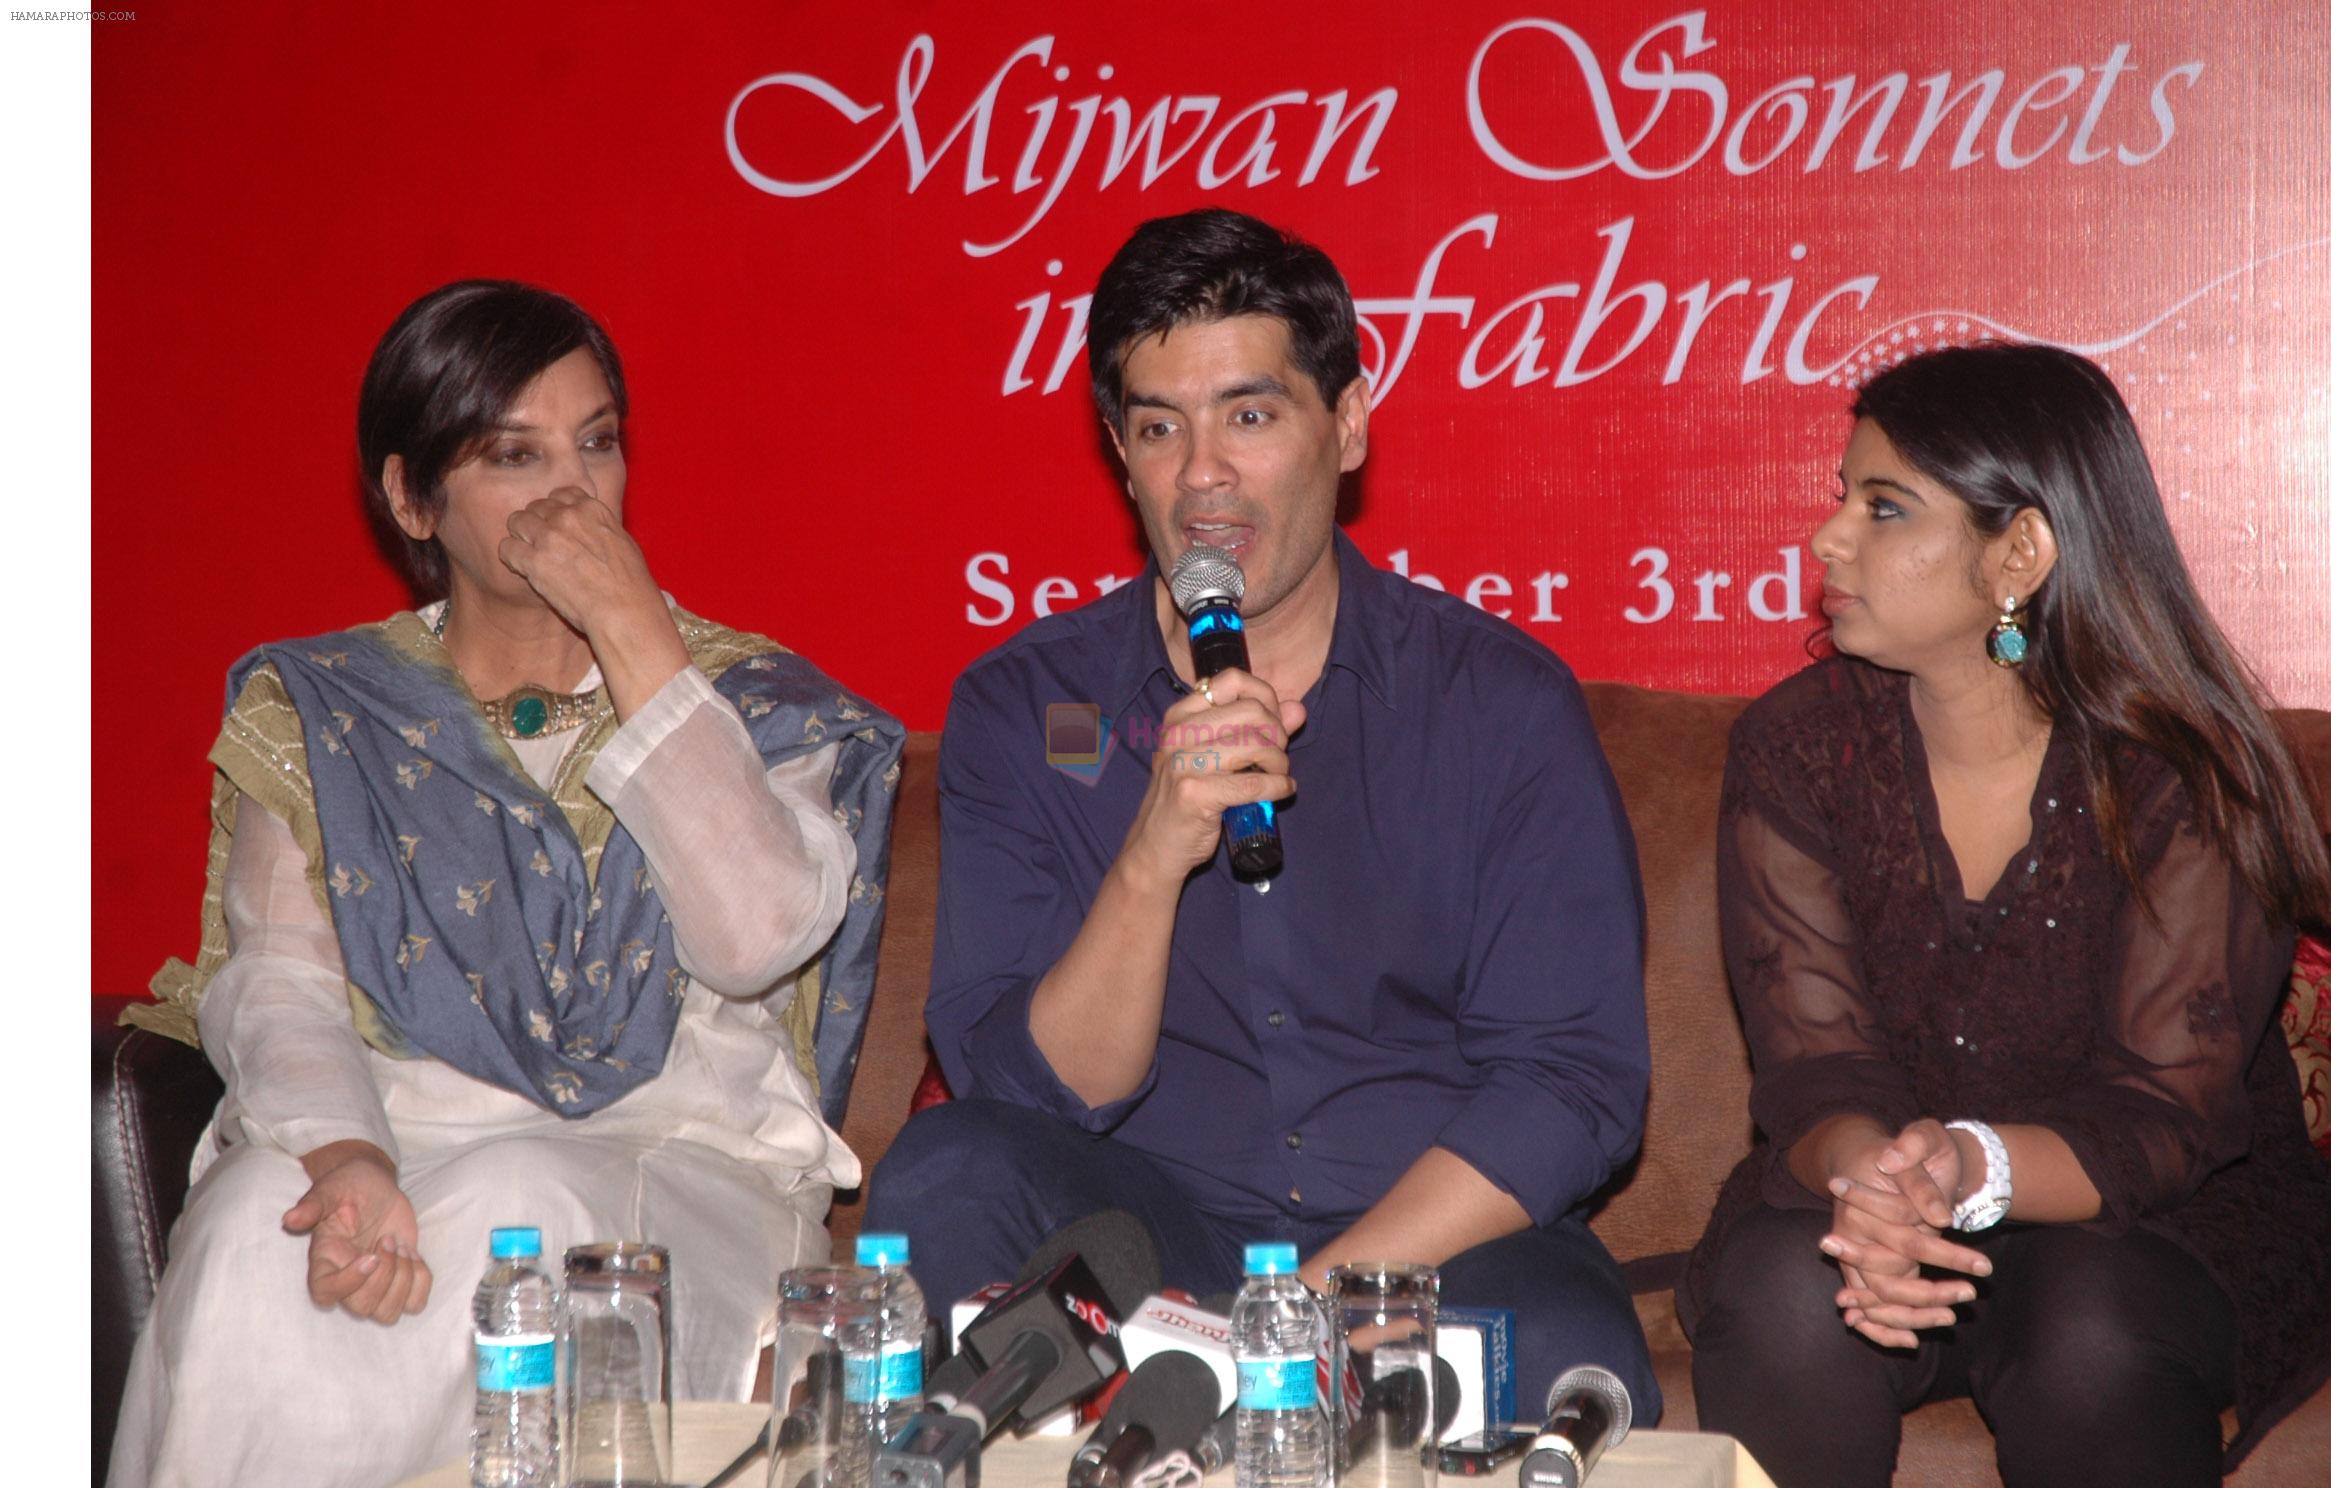 Shabana azmi, Manish malhotra, Namrata at Shabana Azmi's NGO Mijwan Press conference Cast la vie bandra on 22nd aug 2012